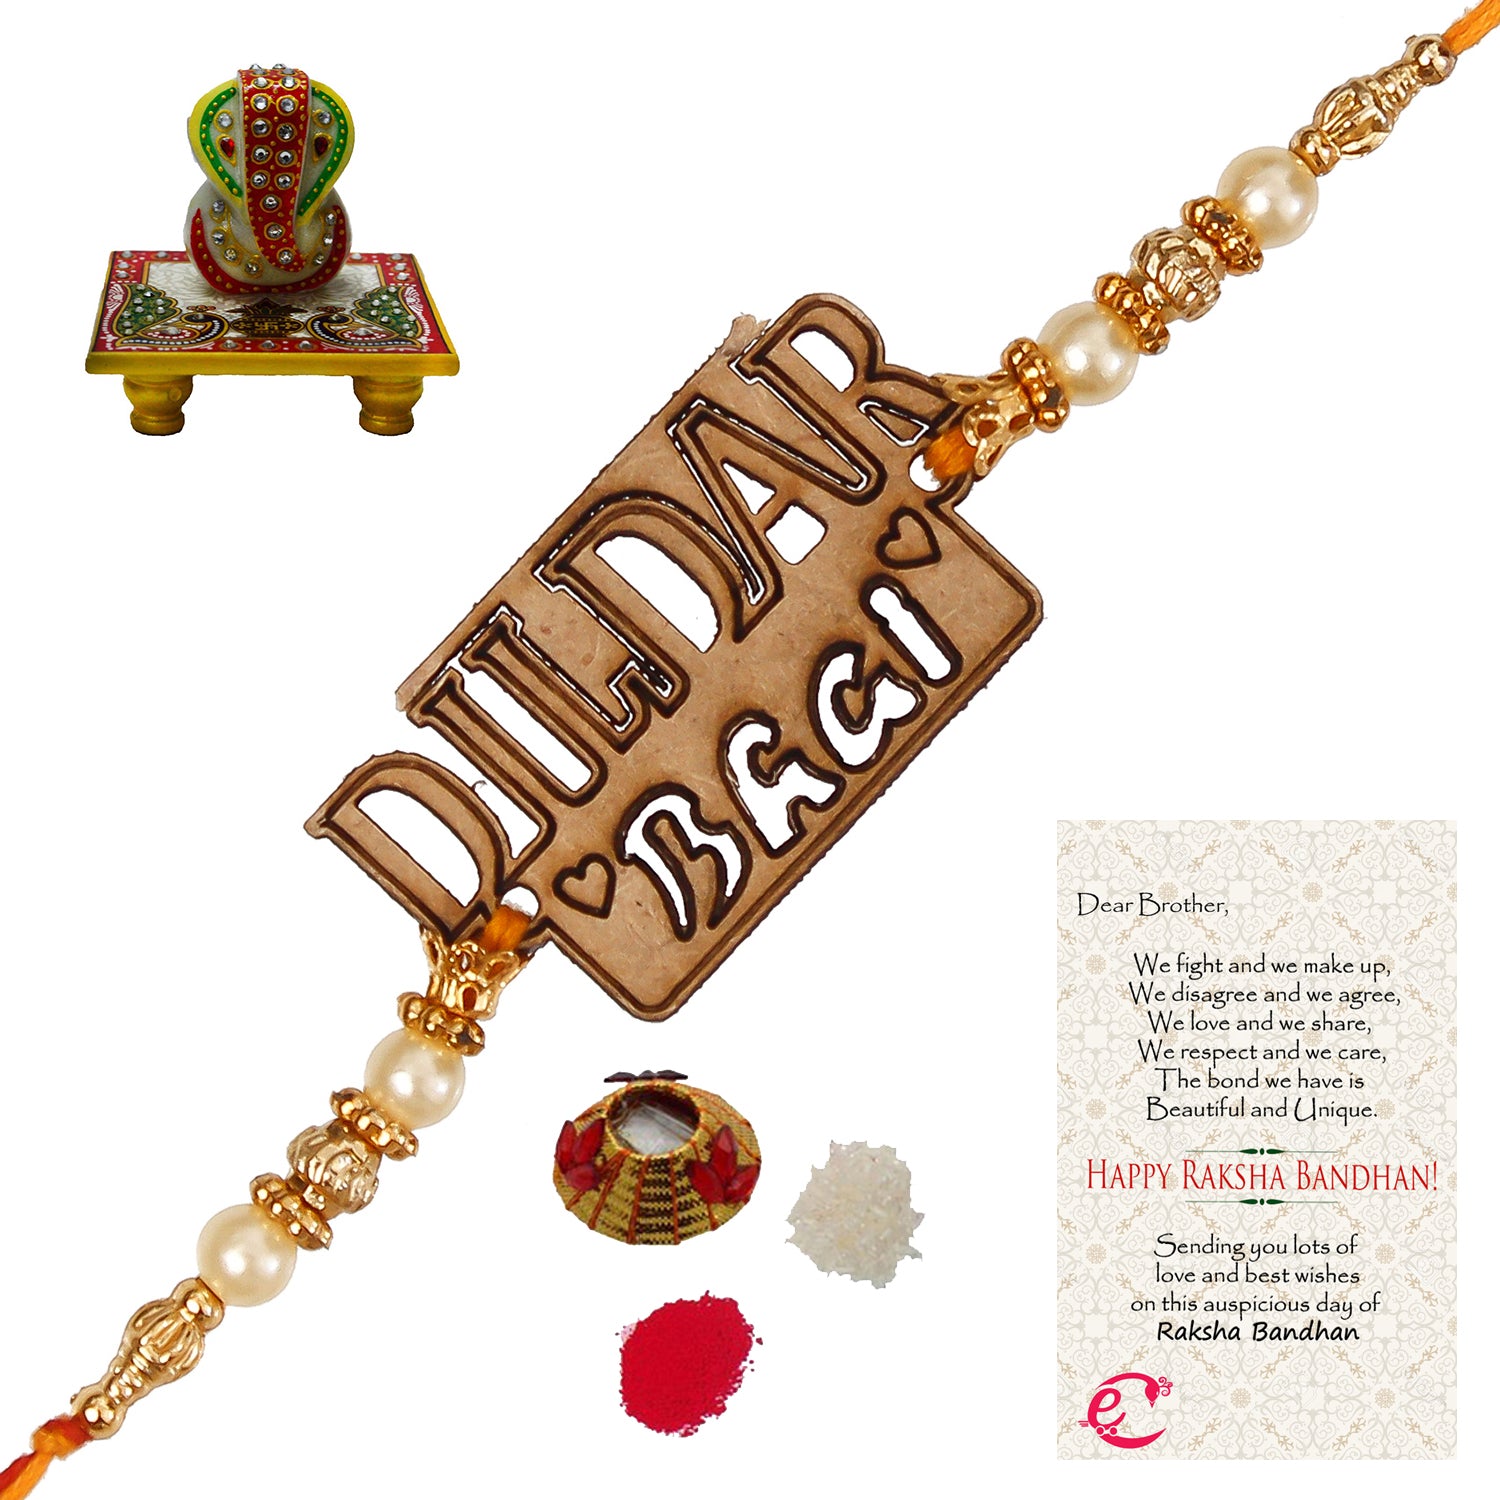 Designer Wooden Dildar Bhai Rakhi with Lord Ganesha on Marble Chowki and Roli Tikka Matki, Best Wishes Greeting Card